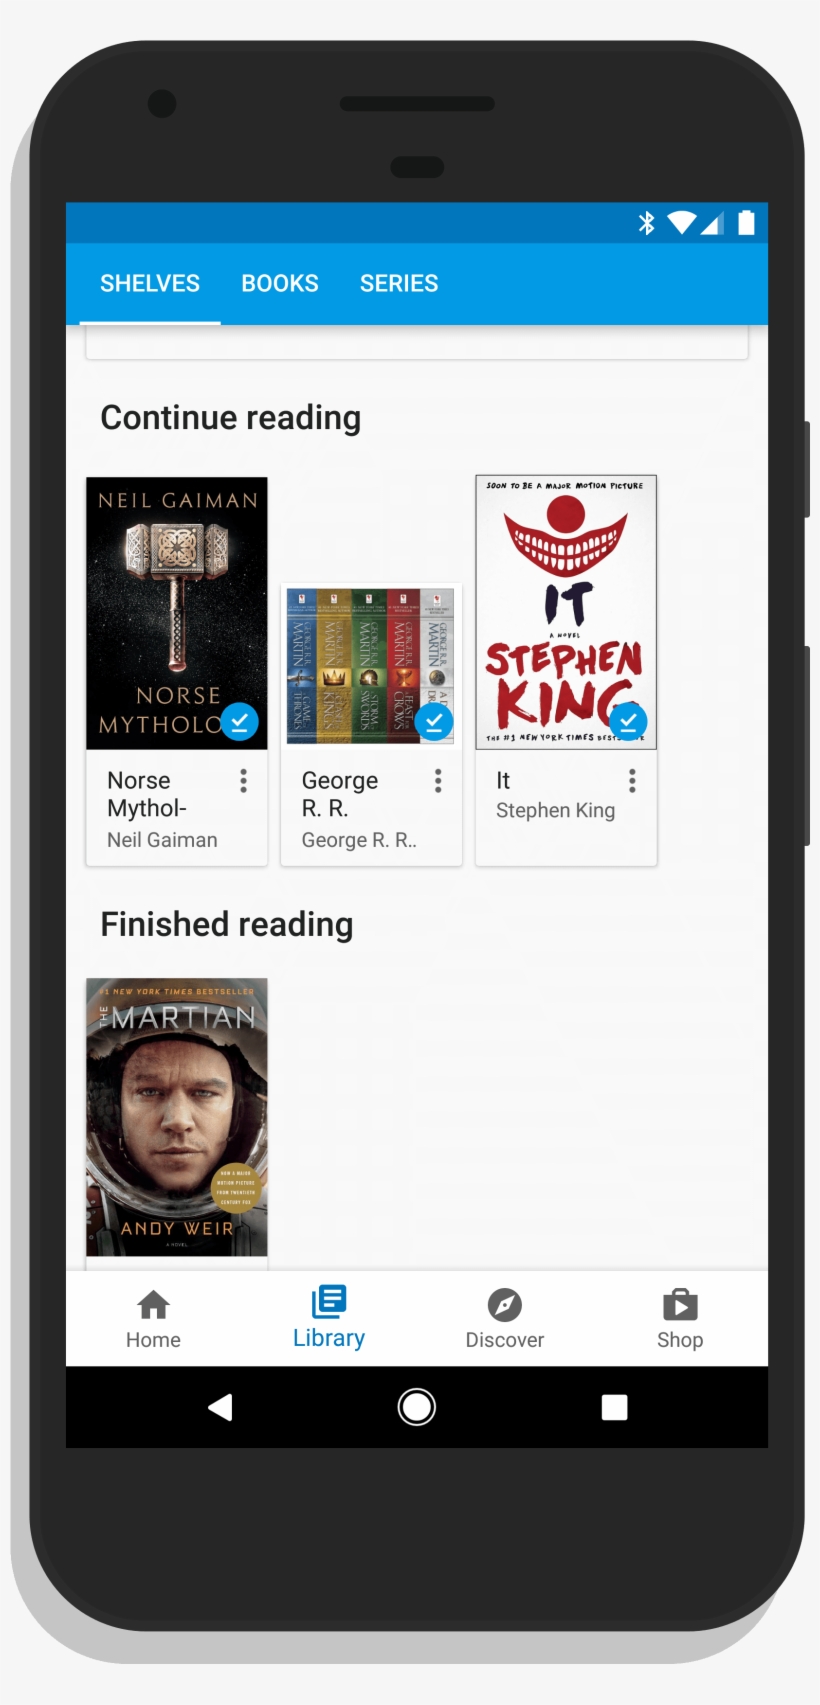 Shelves In Google Play Books - : Ovel, Stephen King Paperback 2016, transparent png #2206115